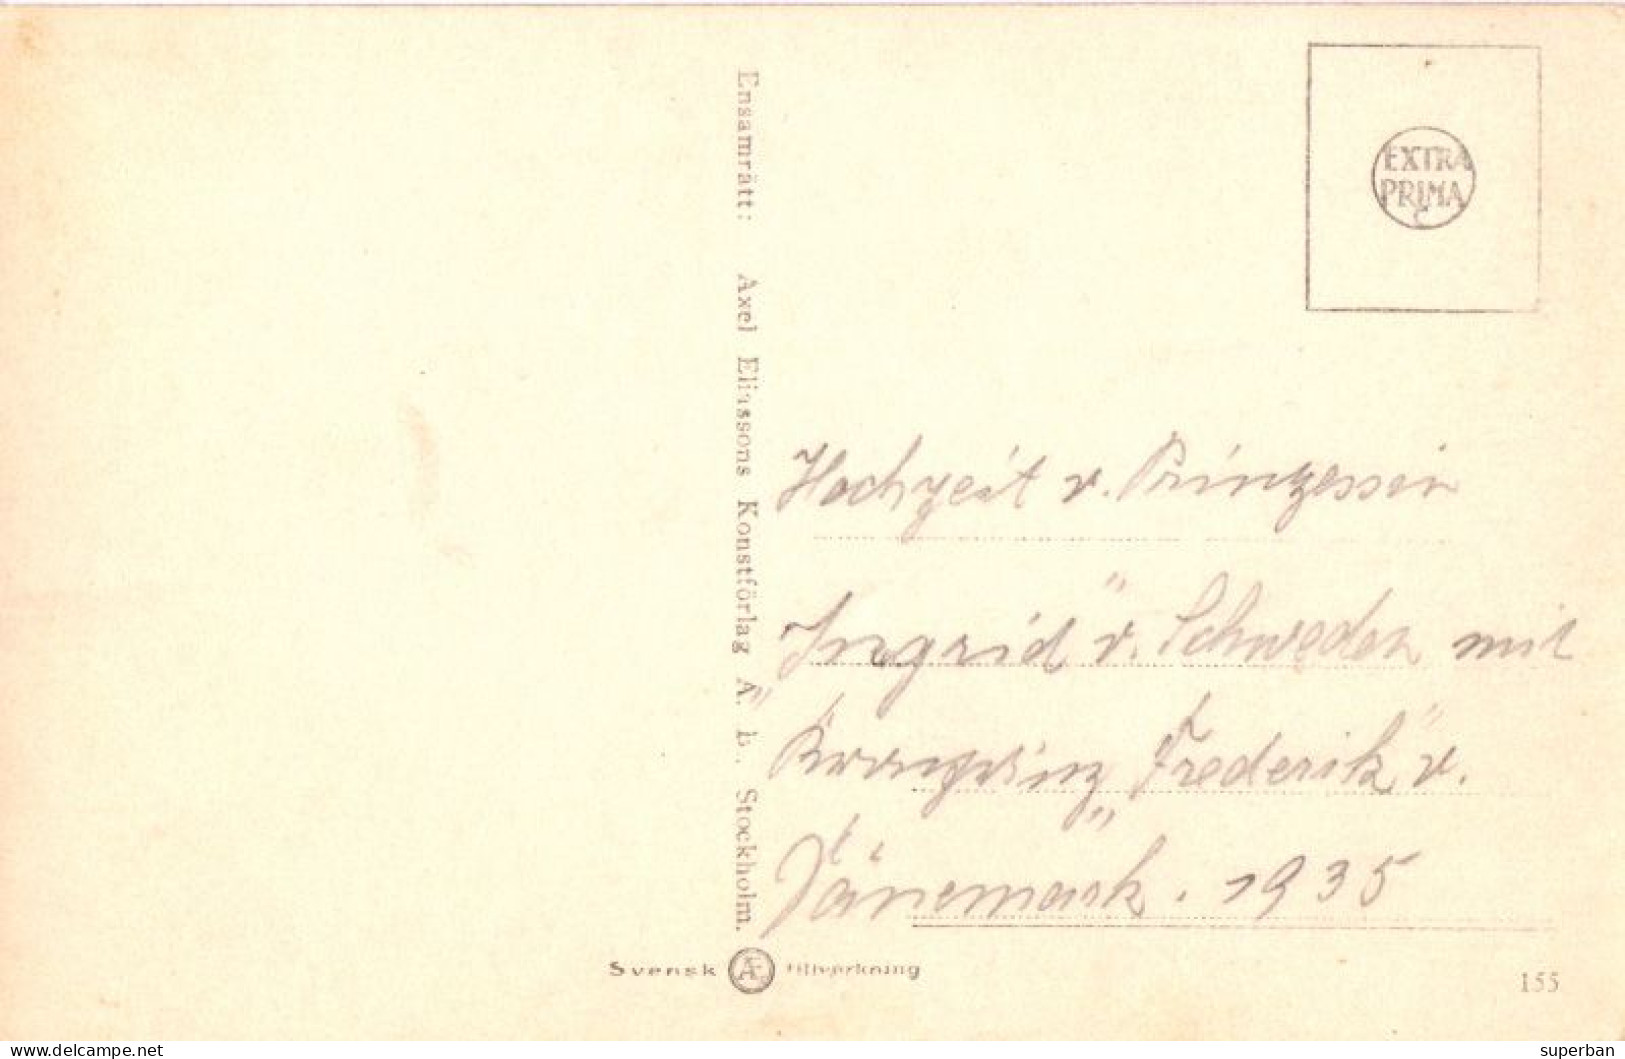 HOCHZEIT V. PRINZESSIN INGRID V. SCHWEDEN MIT KRONPRINZ FREDERIK V. DANEMARK - 24 MAI 1935 (am342) - Königshäuser